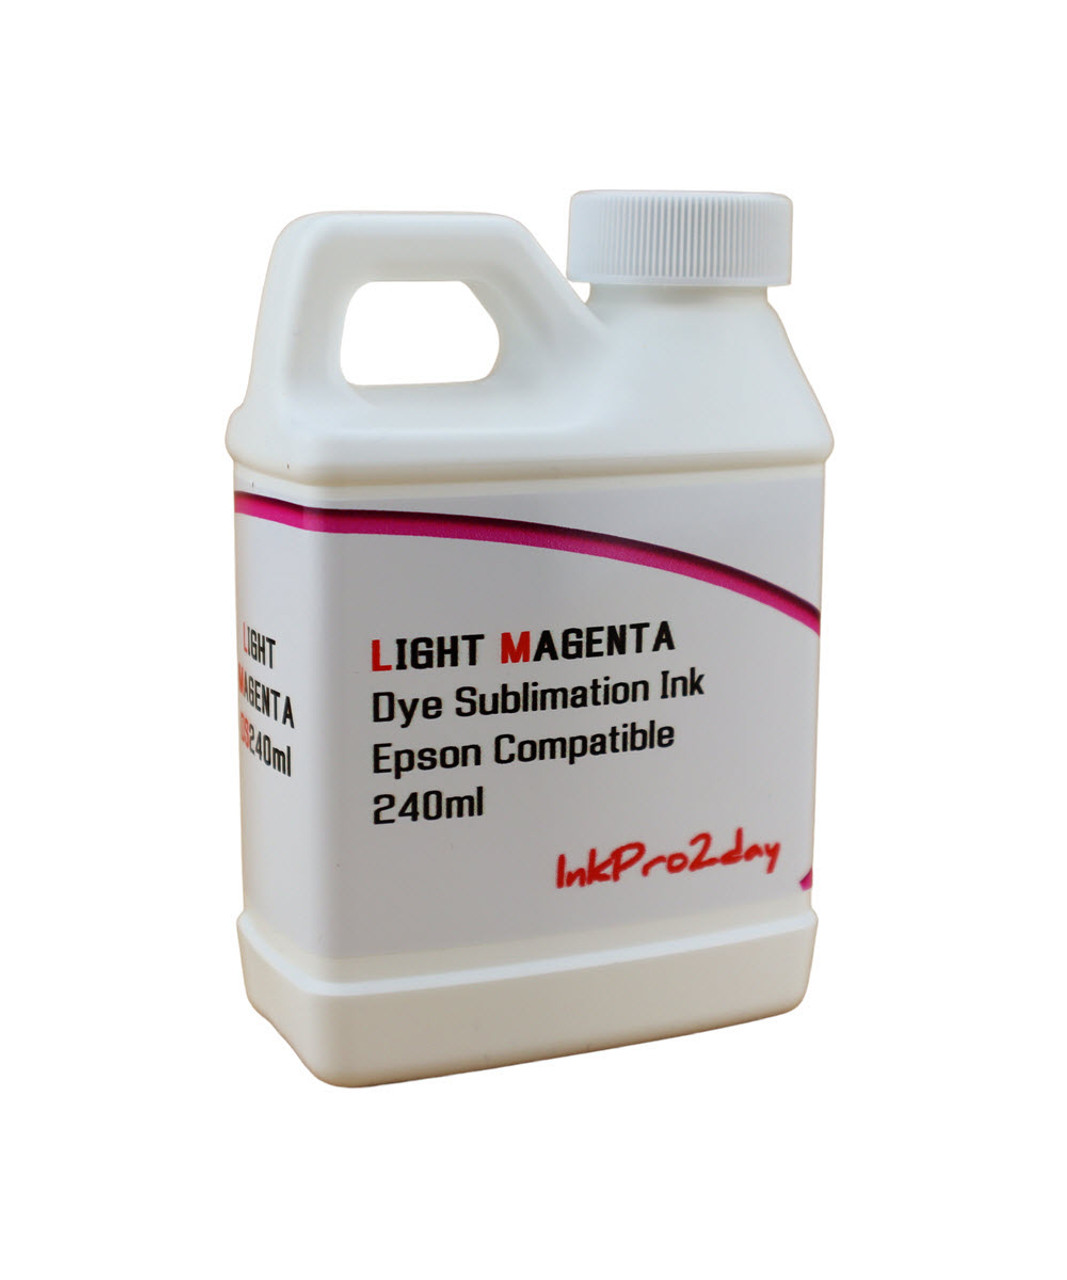 Light Magenta Dye Sublimation Ink 240ml Bottle for Epson Stylus Pro 7800 9800 printers